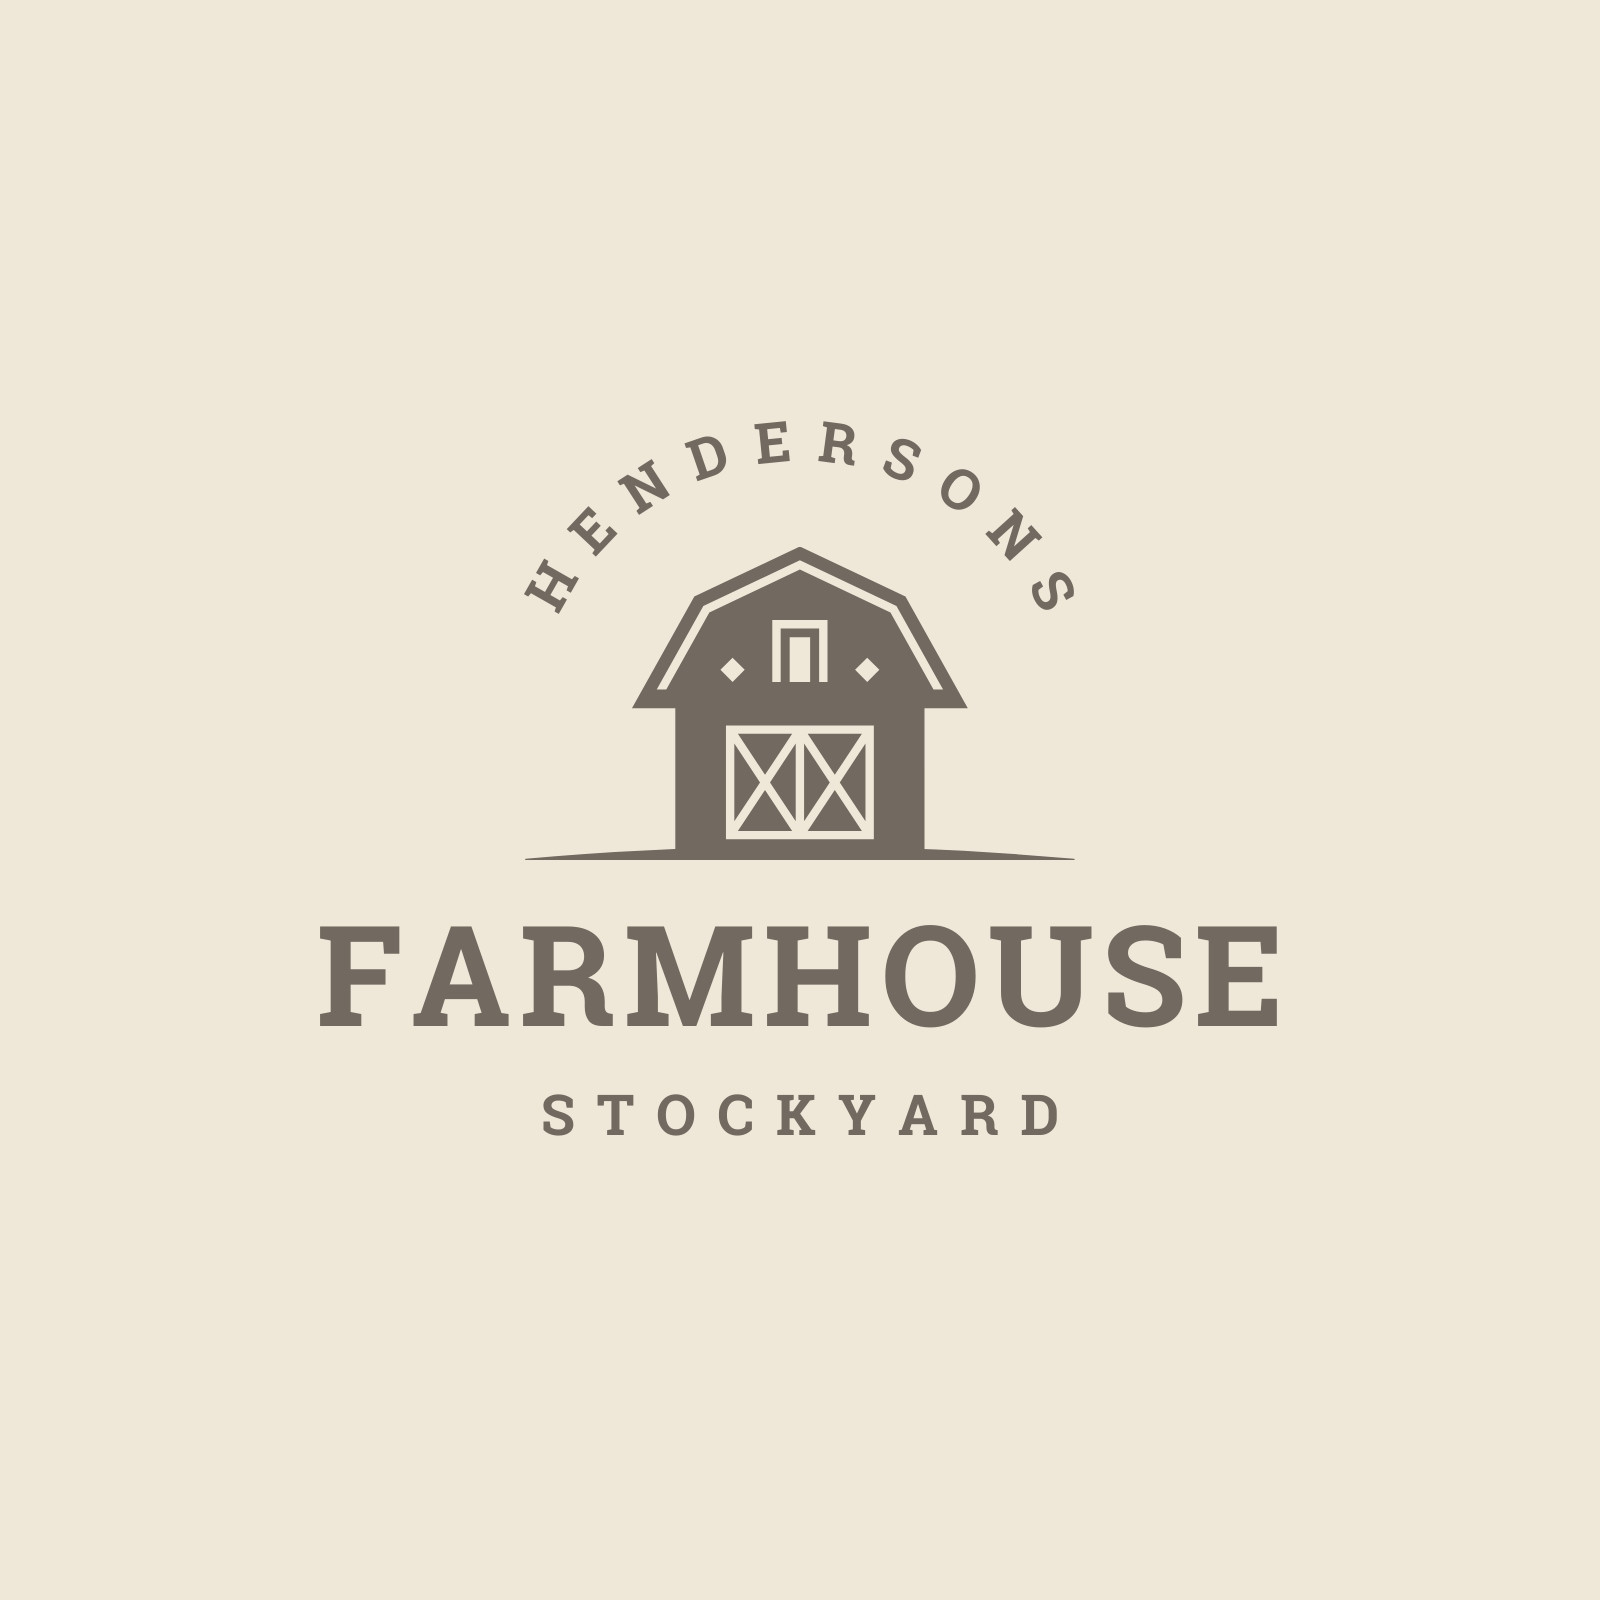 8 Best Farm Logos That Yield Positive Brand Images | DesignRush